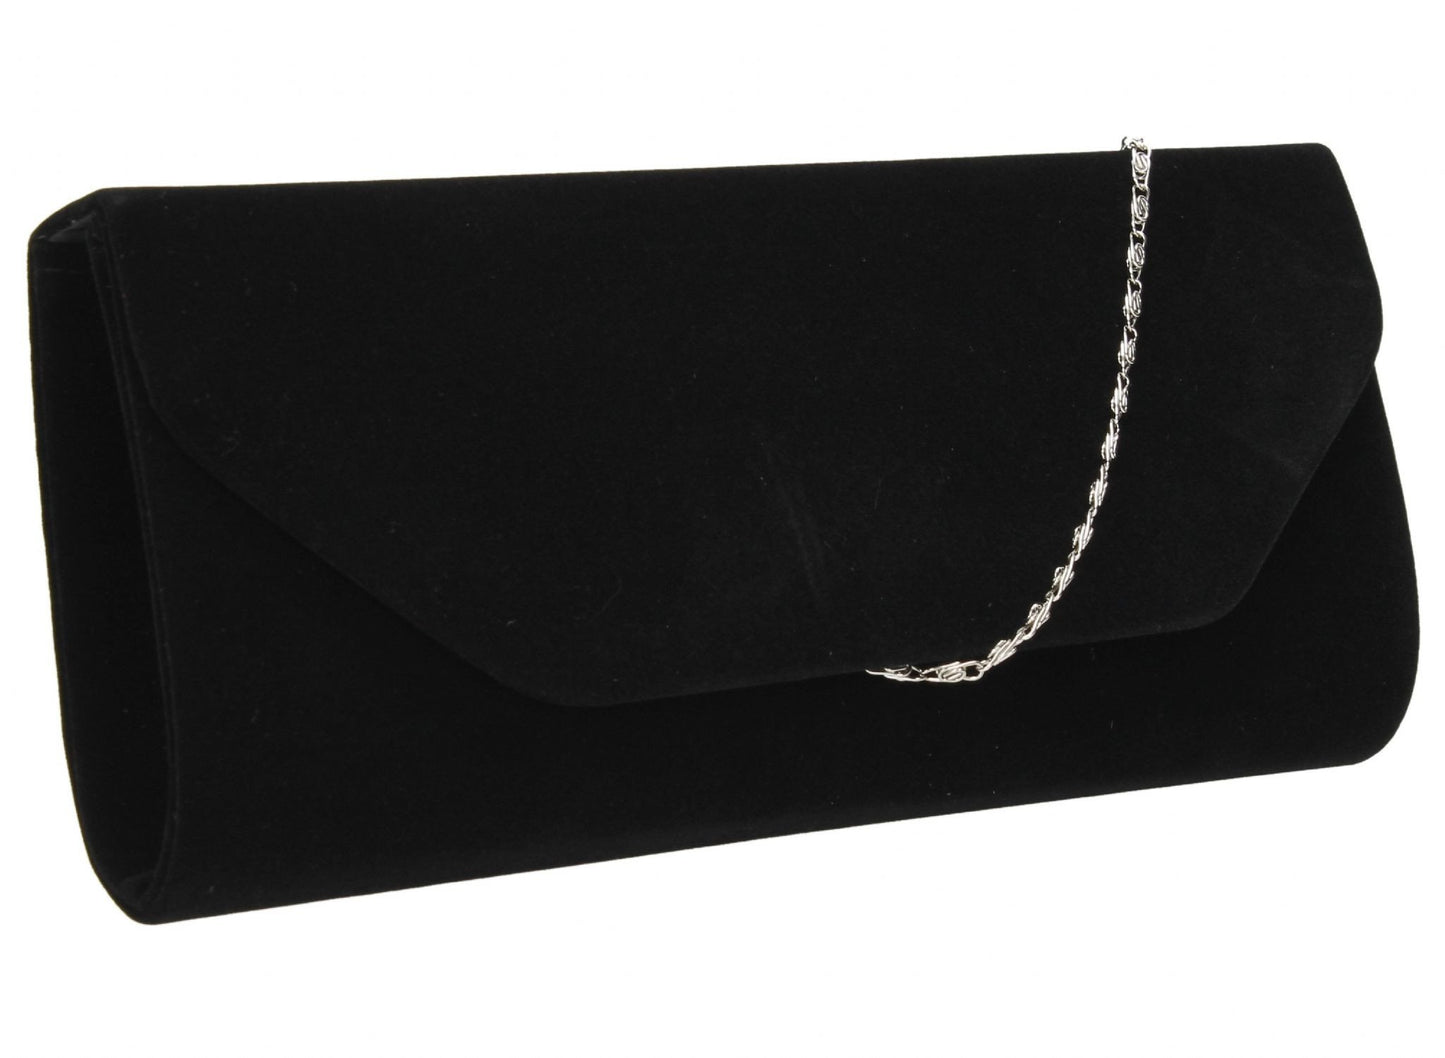 SWANKYSWANS Isabella Velvet Clutch Bag Black Cute Cheap Clutch Bag For Weddings School and Work